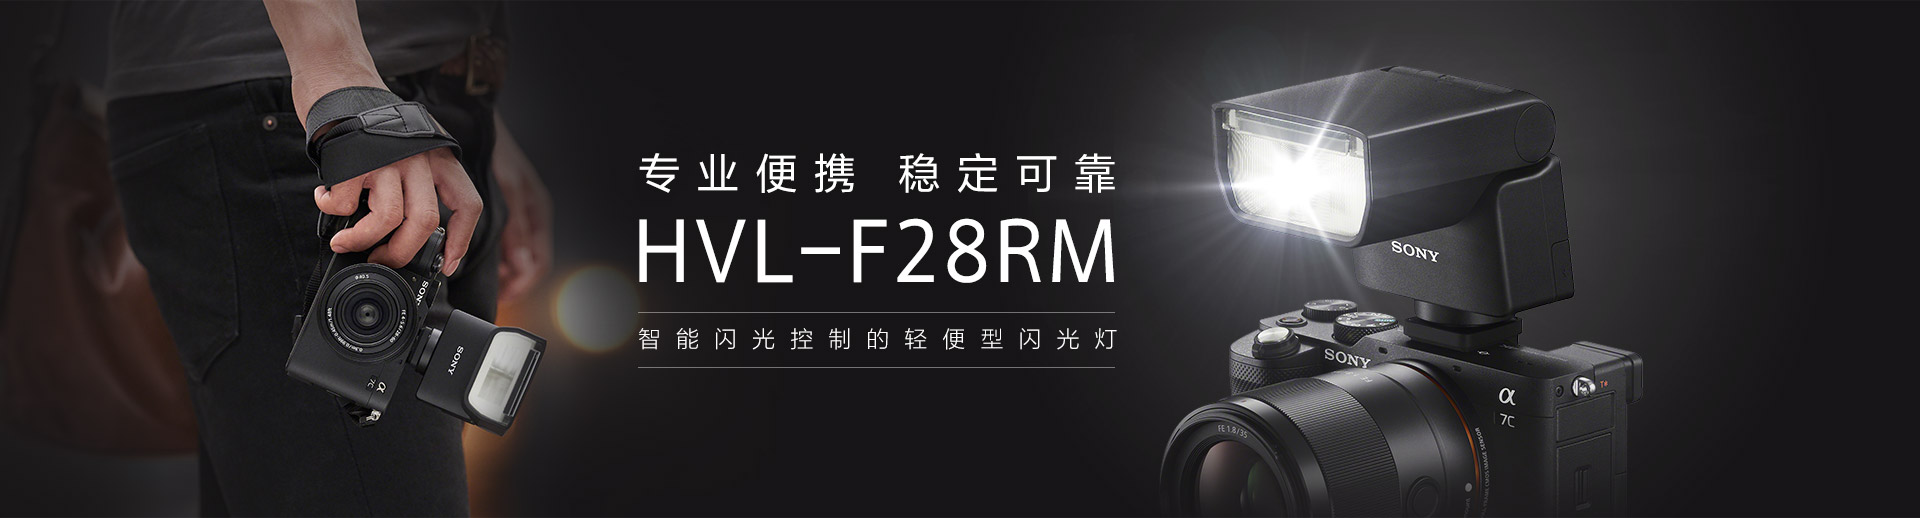 HVL-F28RM轻便型闪光灯